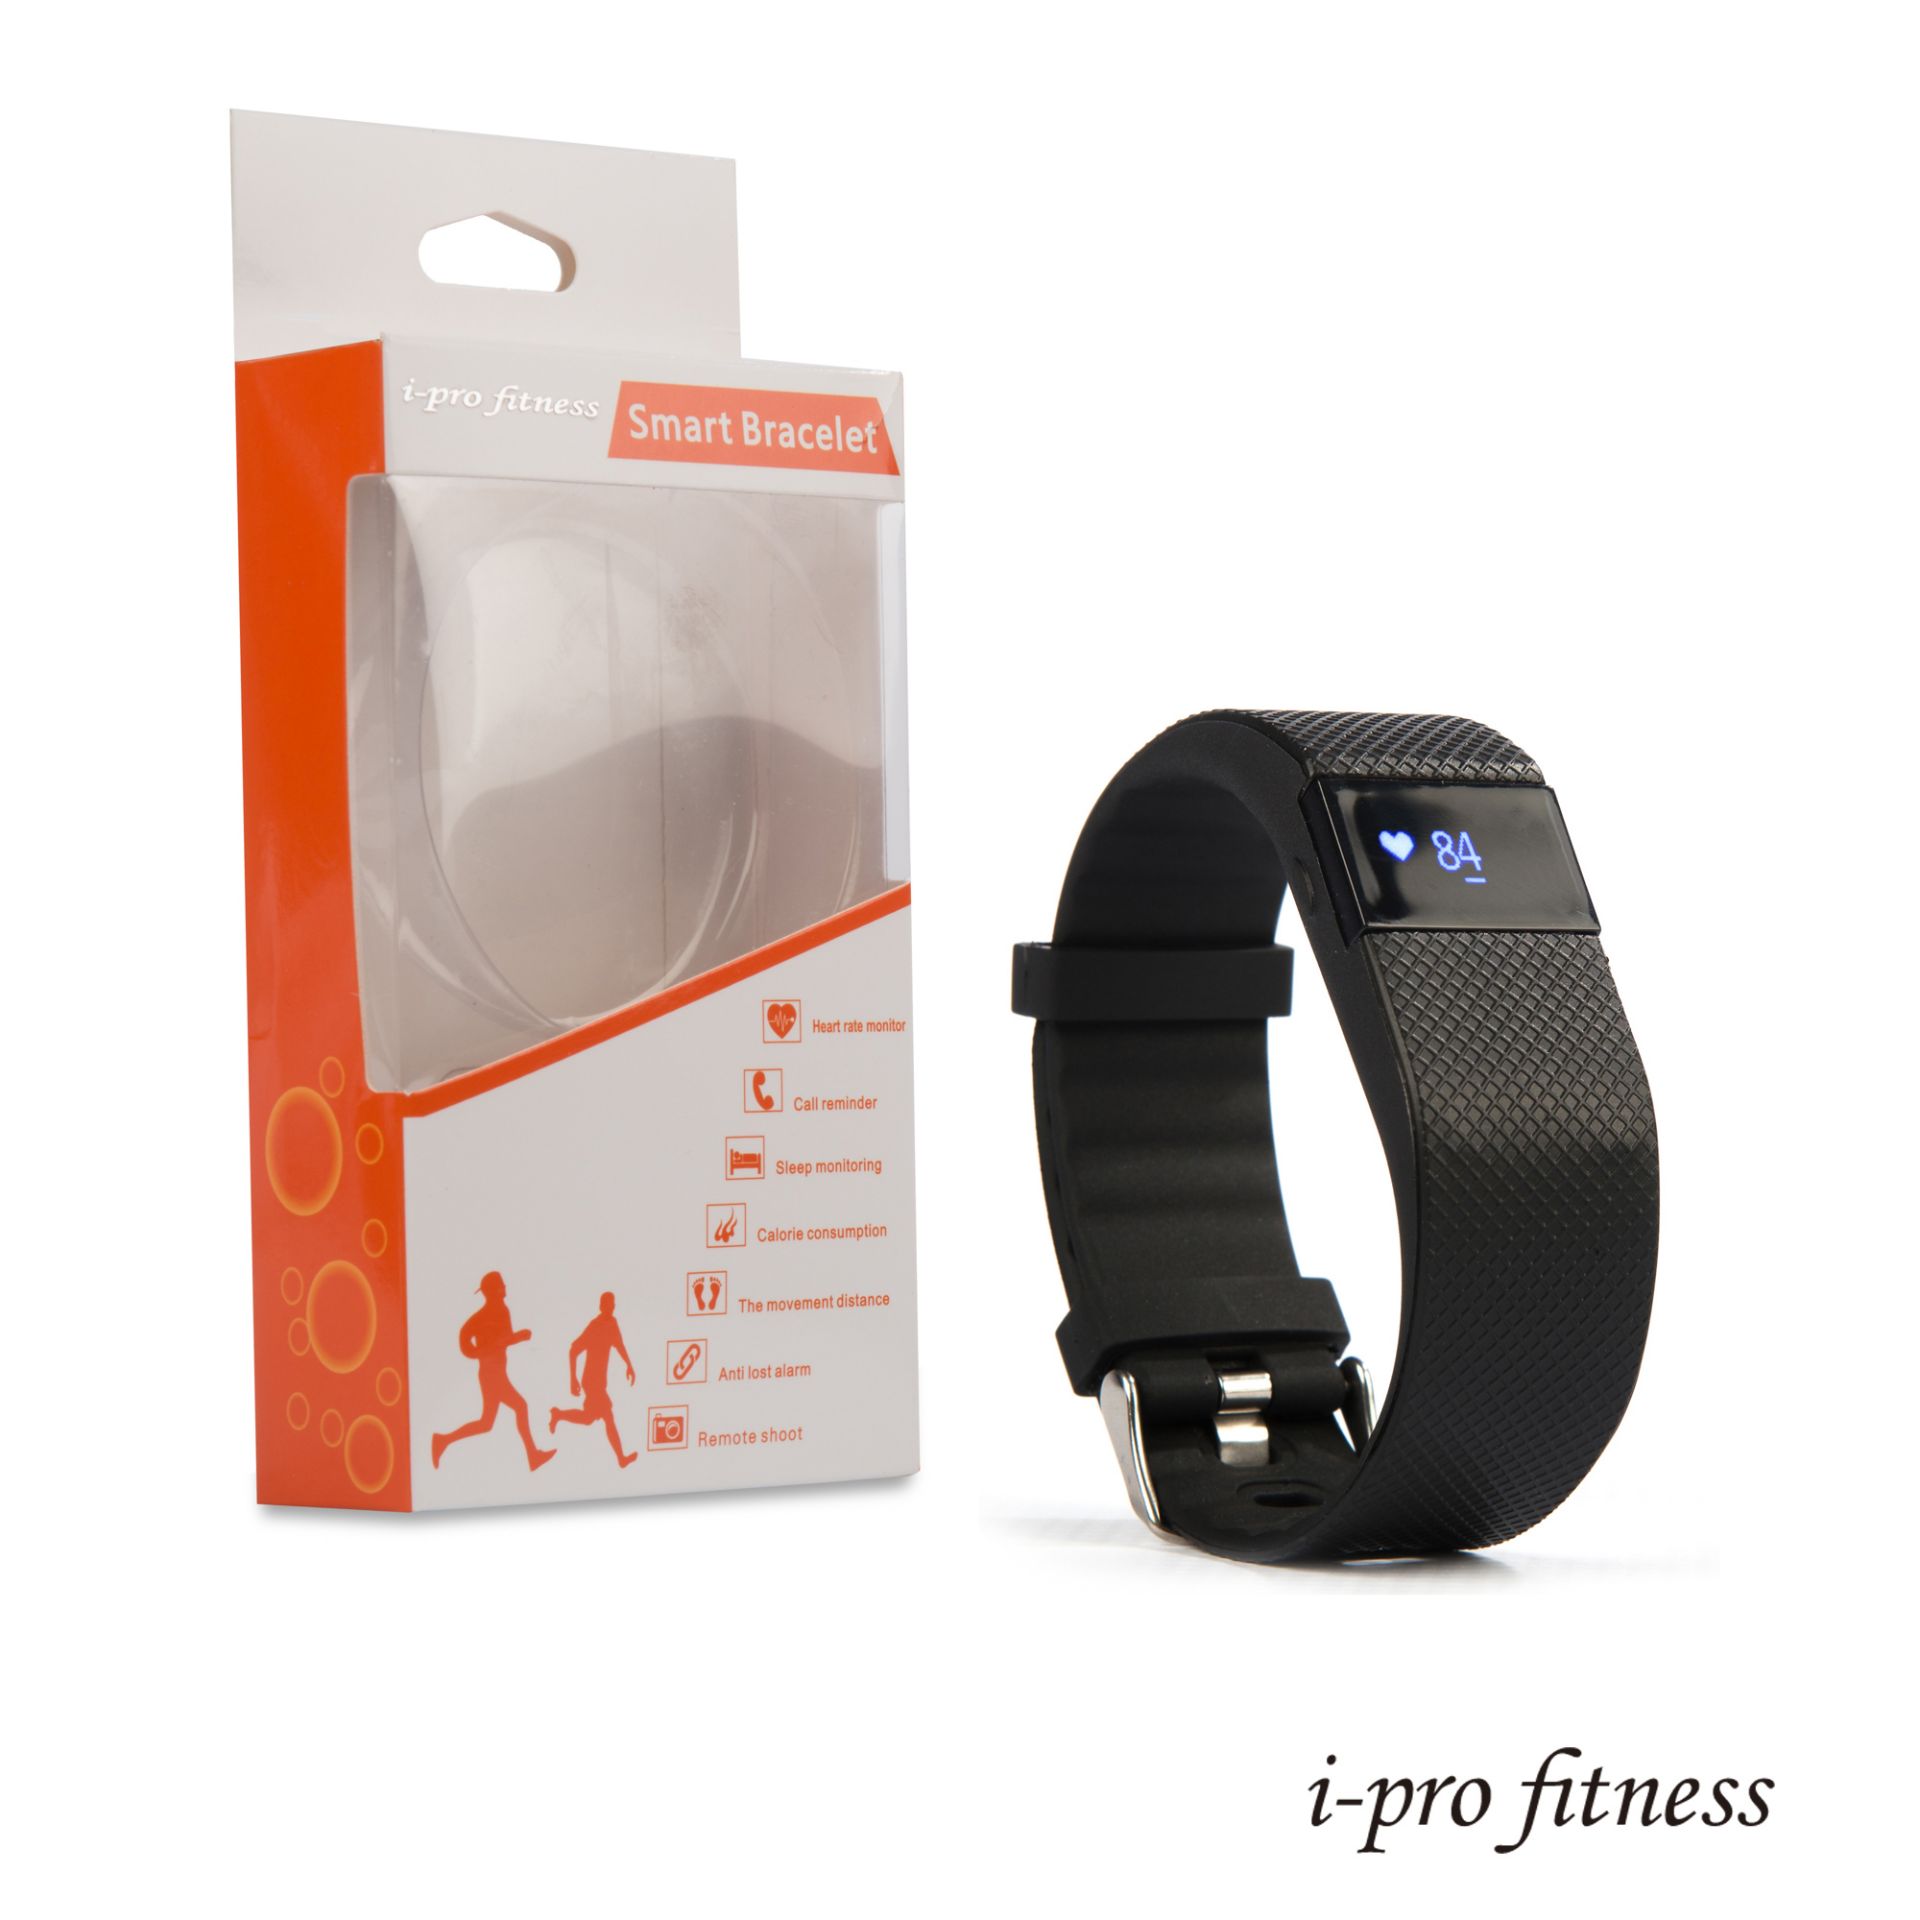 20x Fitness Tracker i-pro fitness, Bluetooth 4.0 Sports Smart Bracelet. - Image 3 of 8